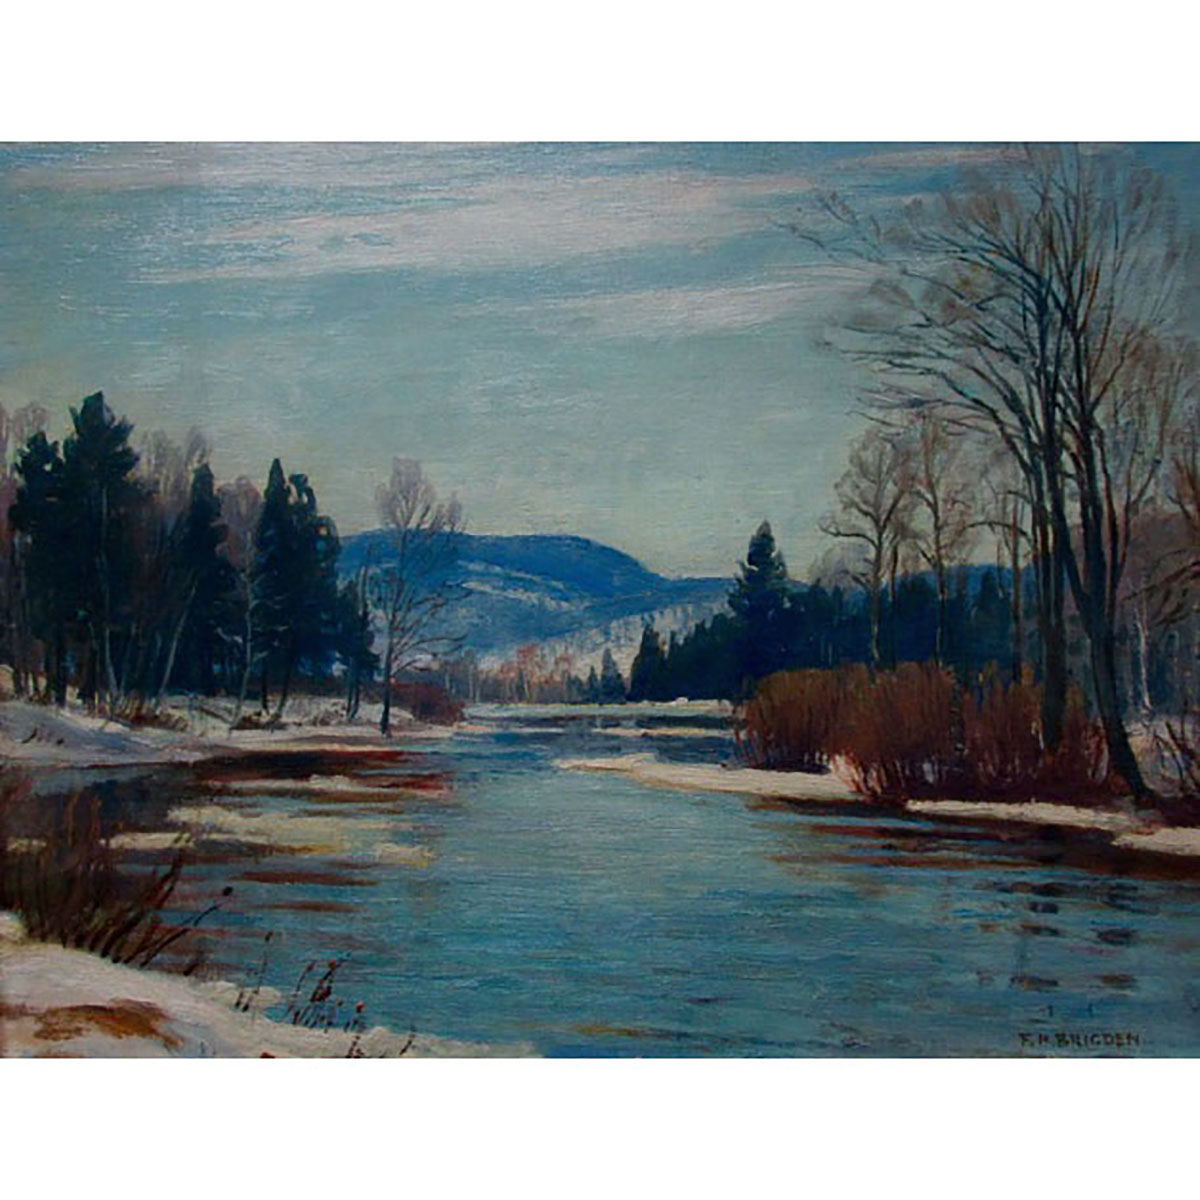 FREDERICK HENRY BRIGDEN (CANADIAN, 1871-1956) 